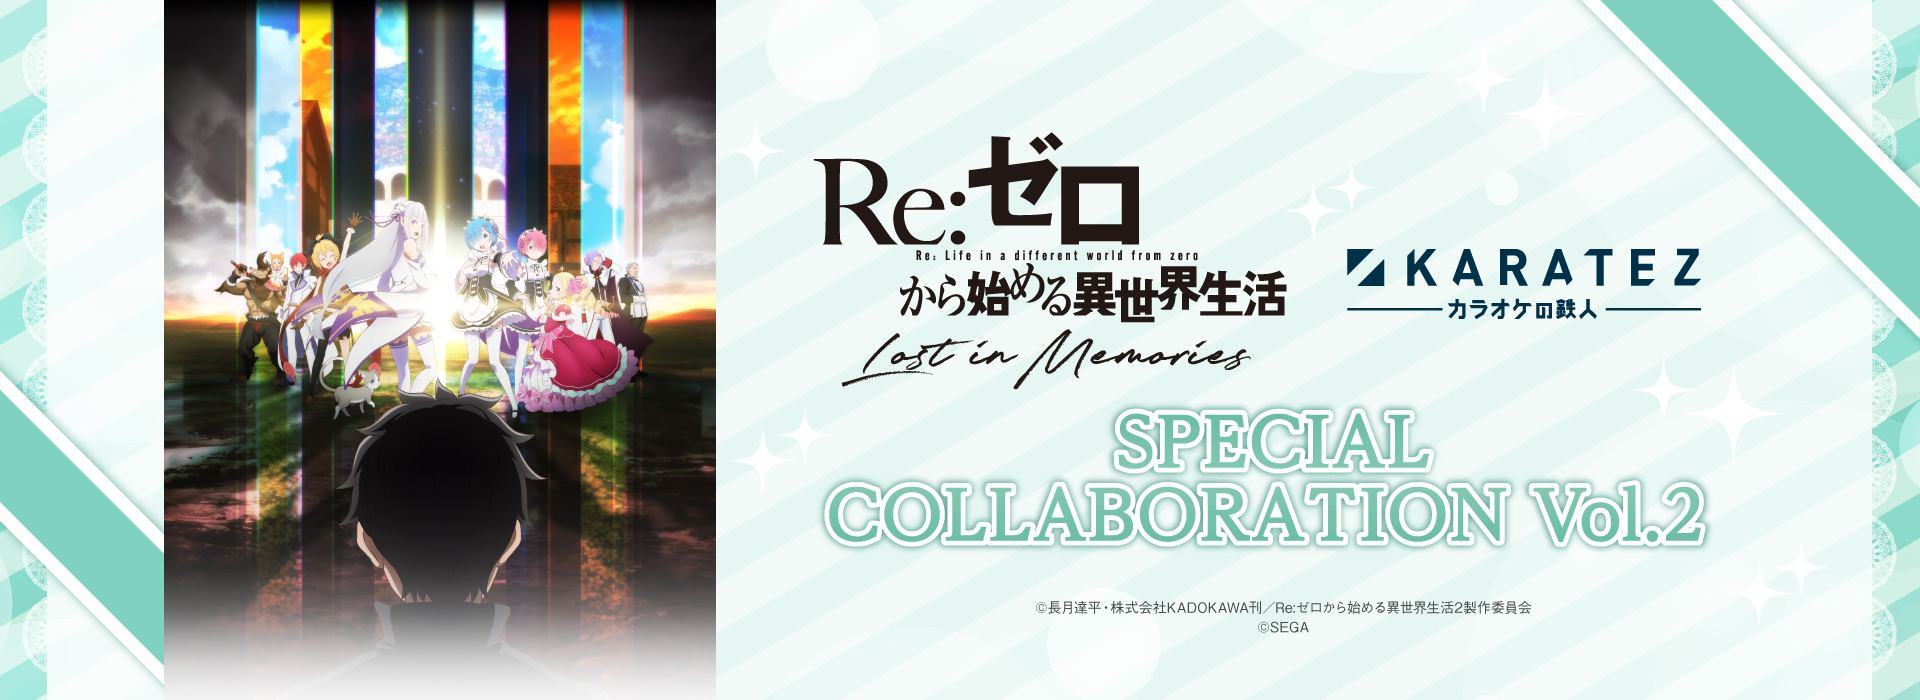 『Re:ゼロから始める異世界生活 Lost in Memories』×カラオケの鉄人 vol.2